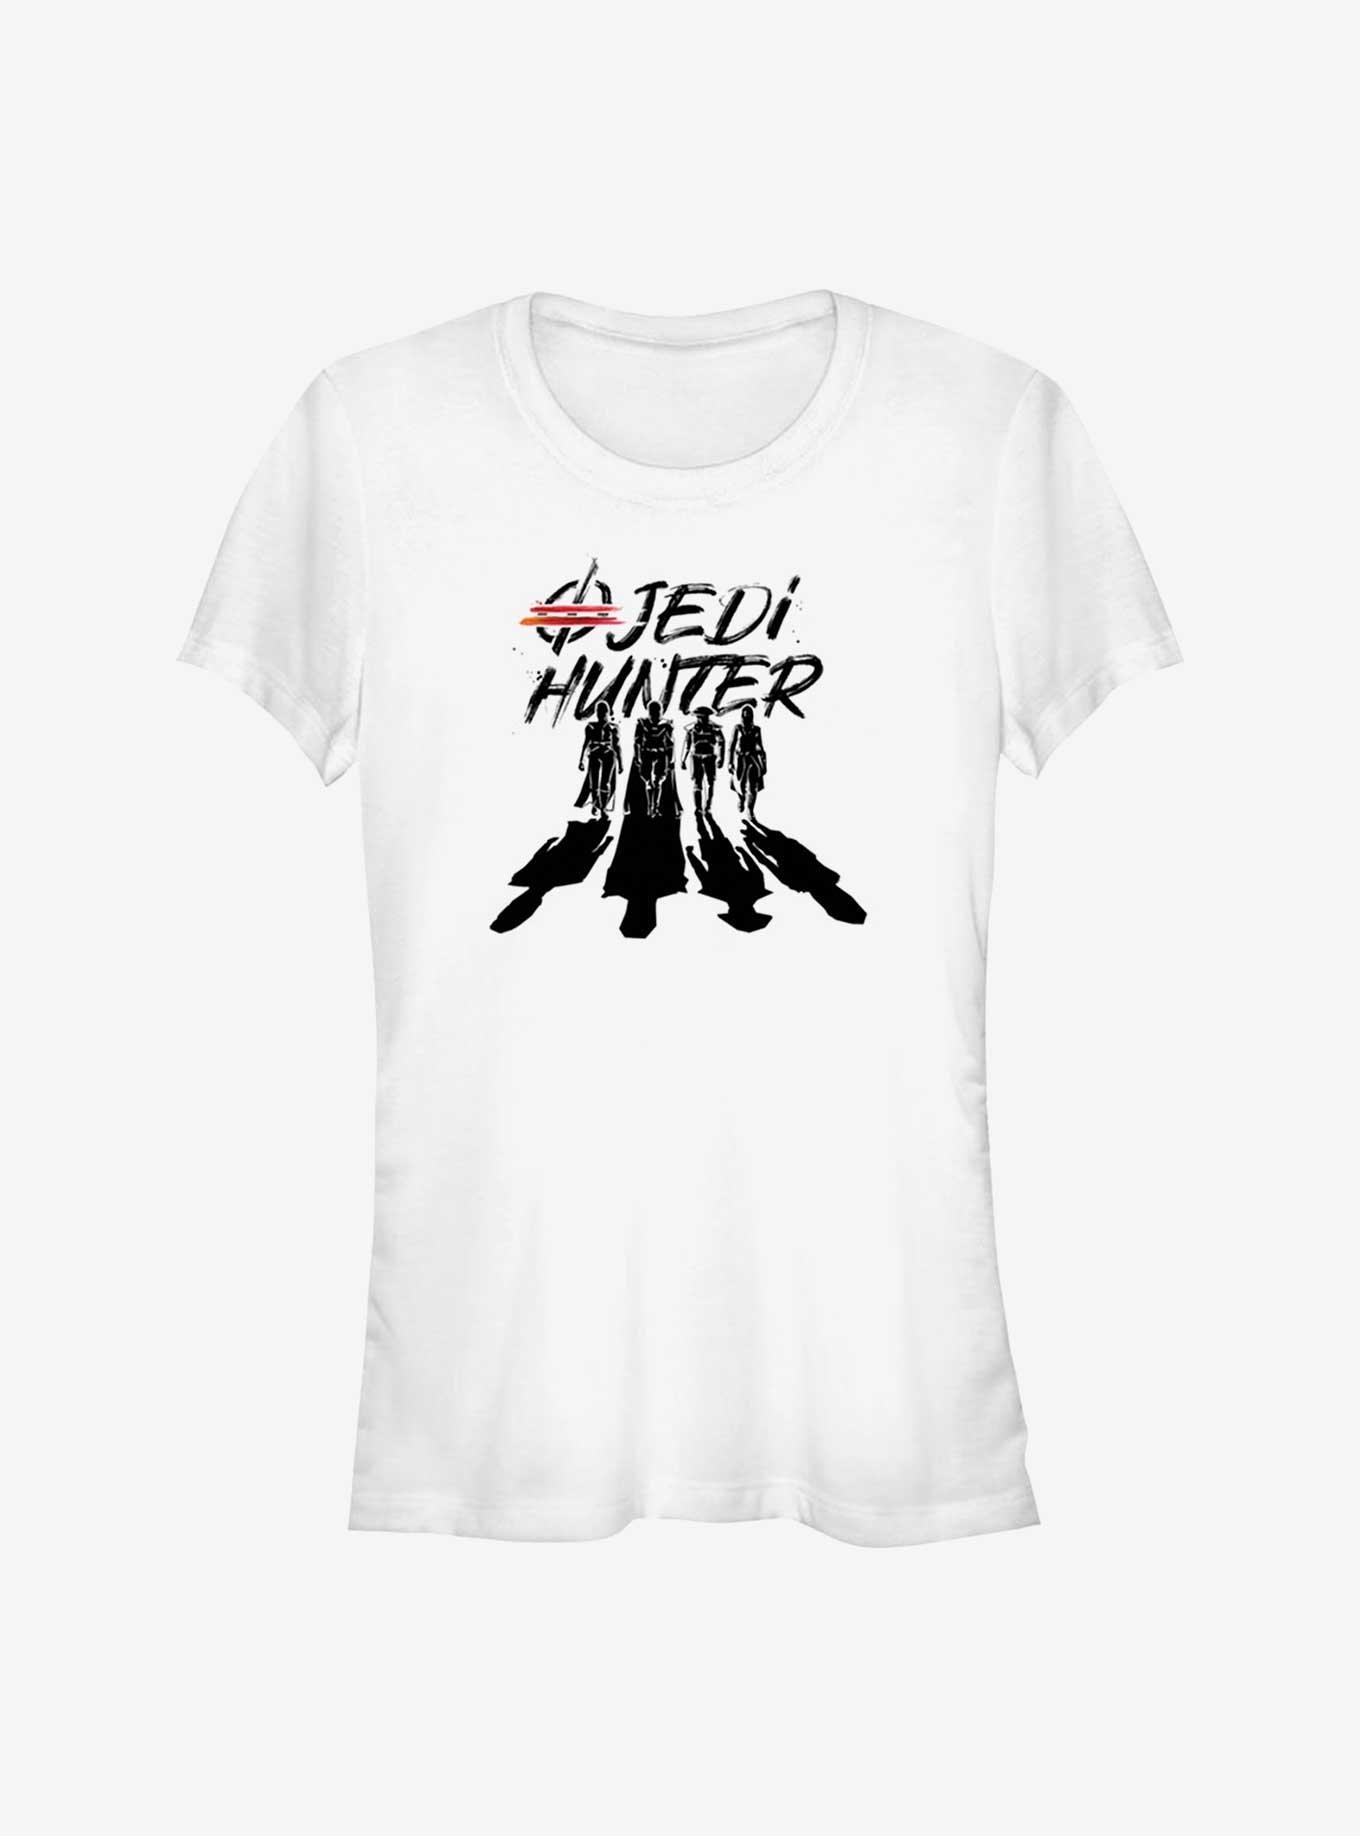 Star Wars Obi-Wan Kenobi Jedi Hunter Silhouettes Girls T-Shirt